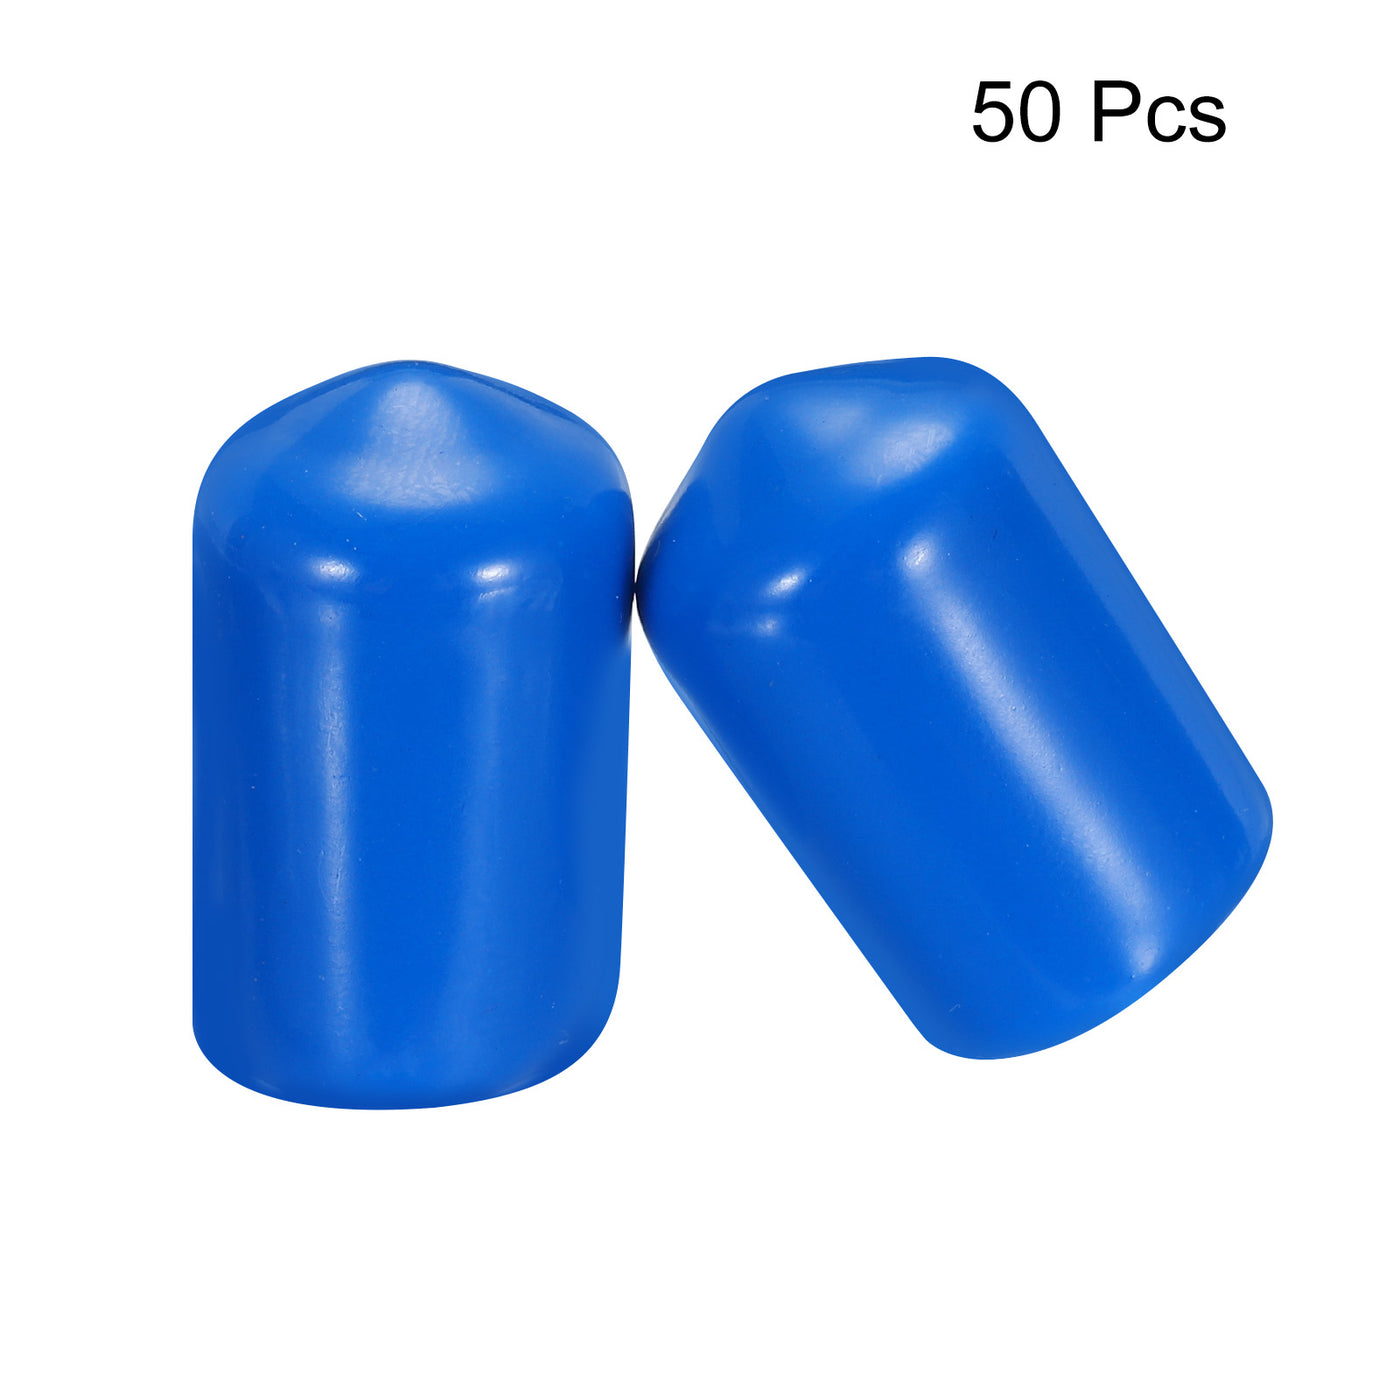 uxcell Uxcell 50pcs Rubber End Caps 14mm ID Vinyl PVC Round Tube Bolt Cap Cover Screw Thread Protectors Blue